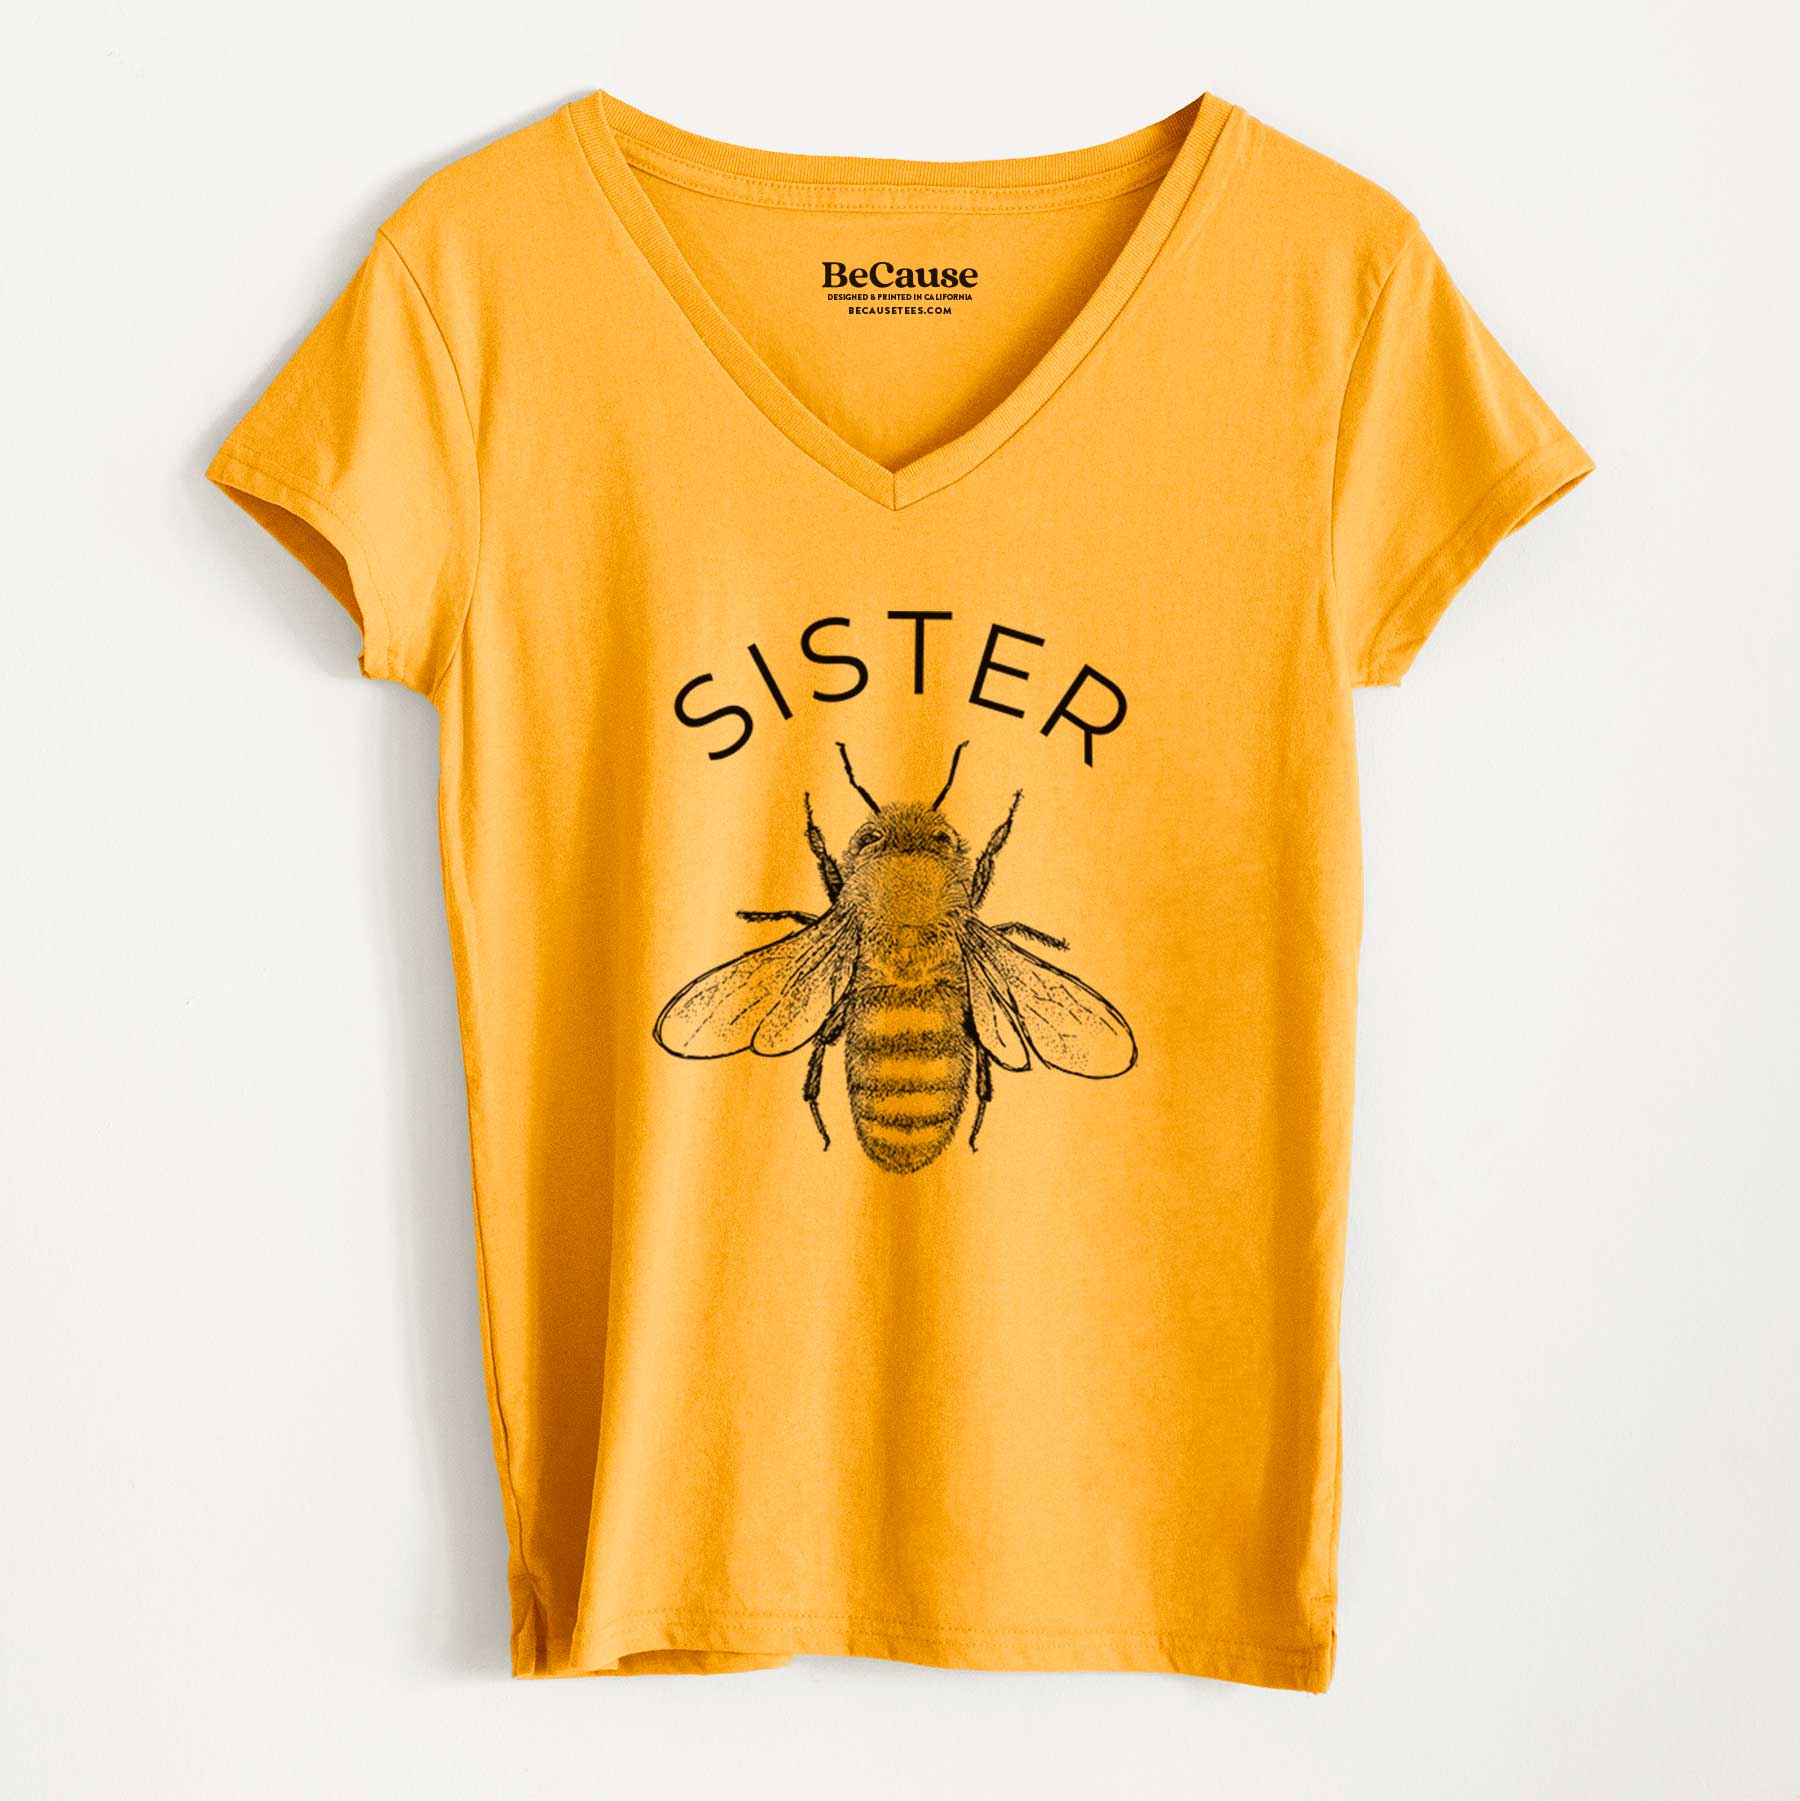 Sister Bee Hand Towel - Because Tees